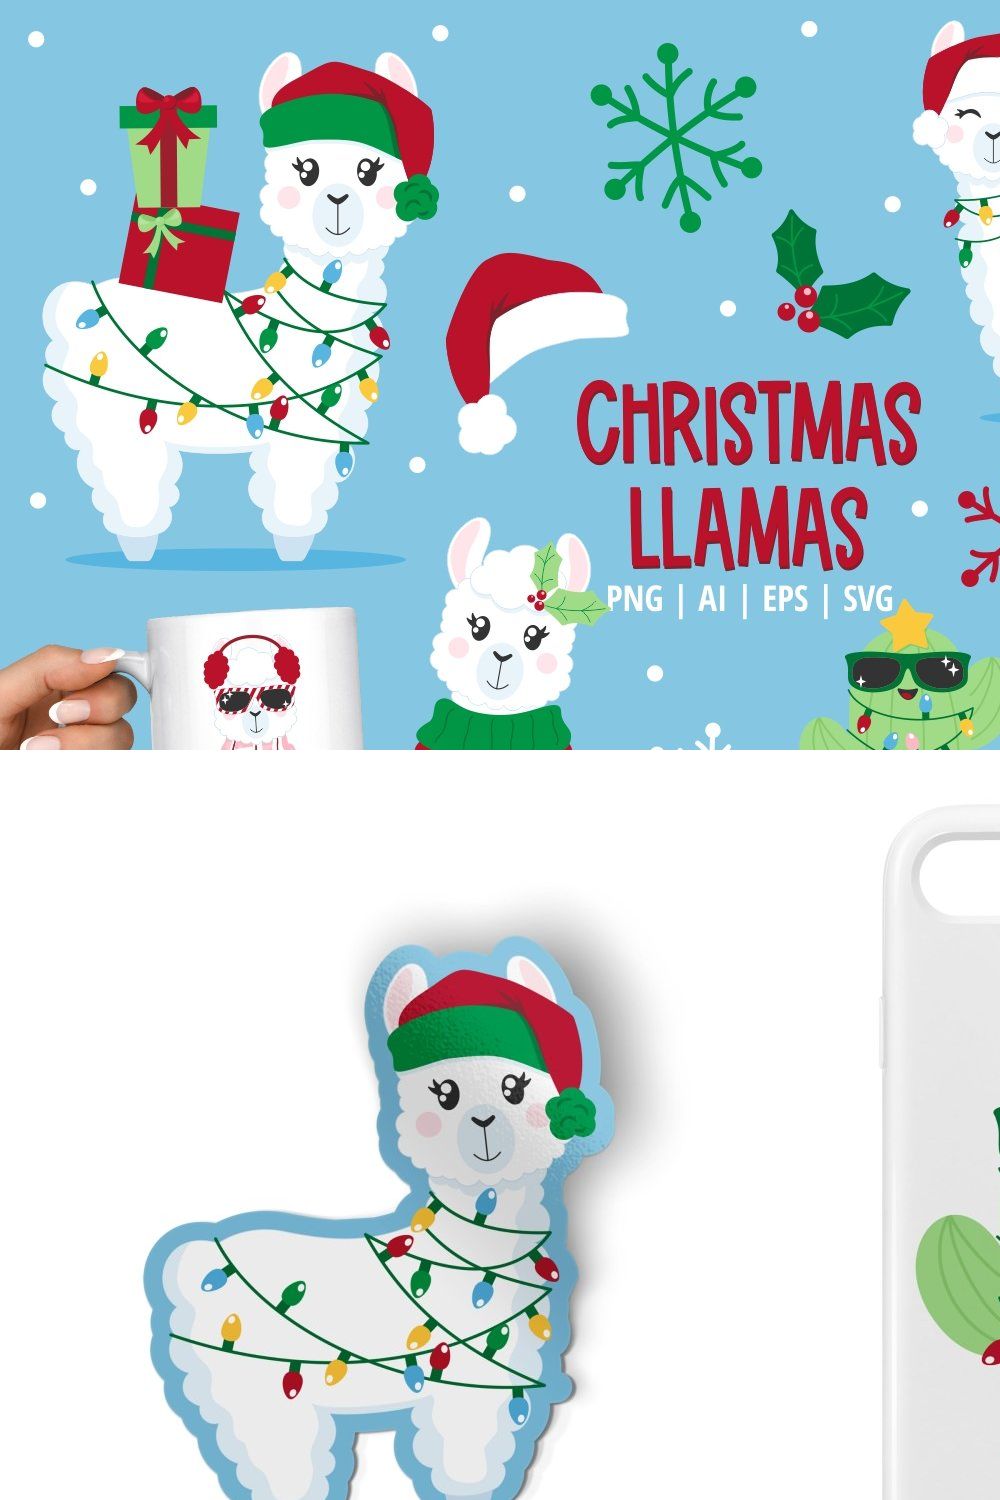 Christmas Llamas pinterest preview image.